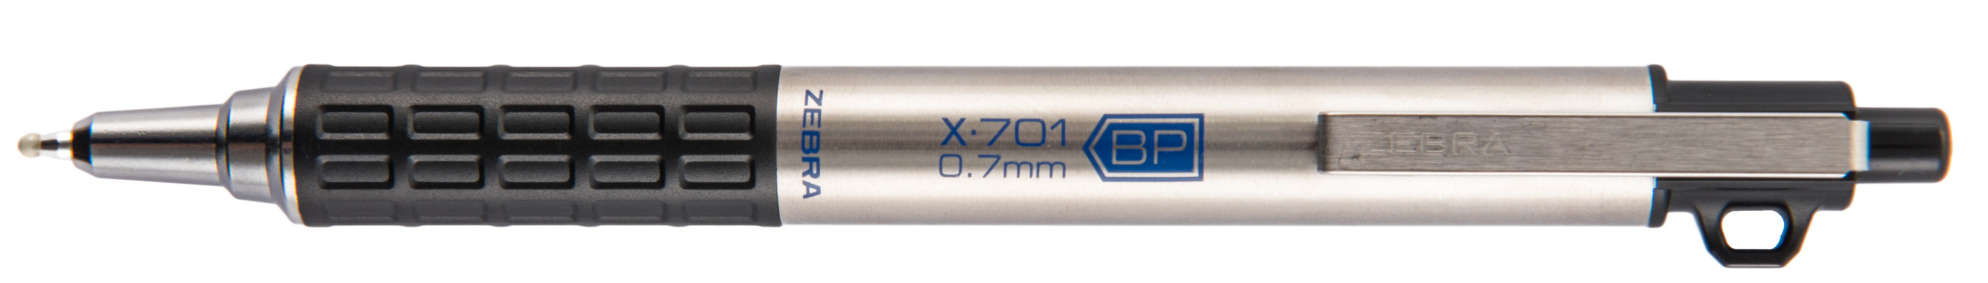 X-701 ballpoint pen with pressurized barrel 1